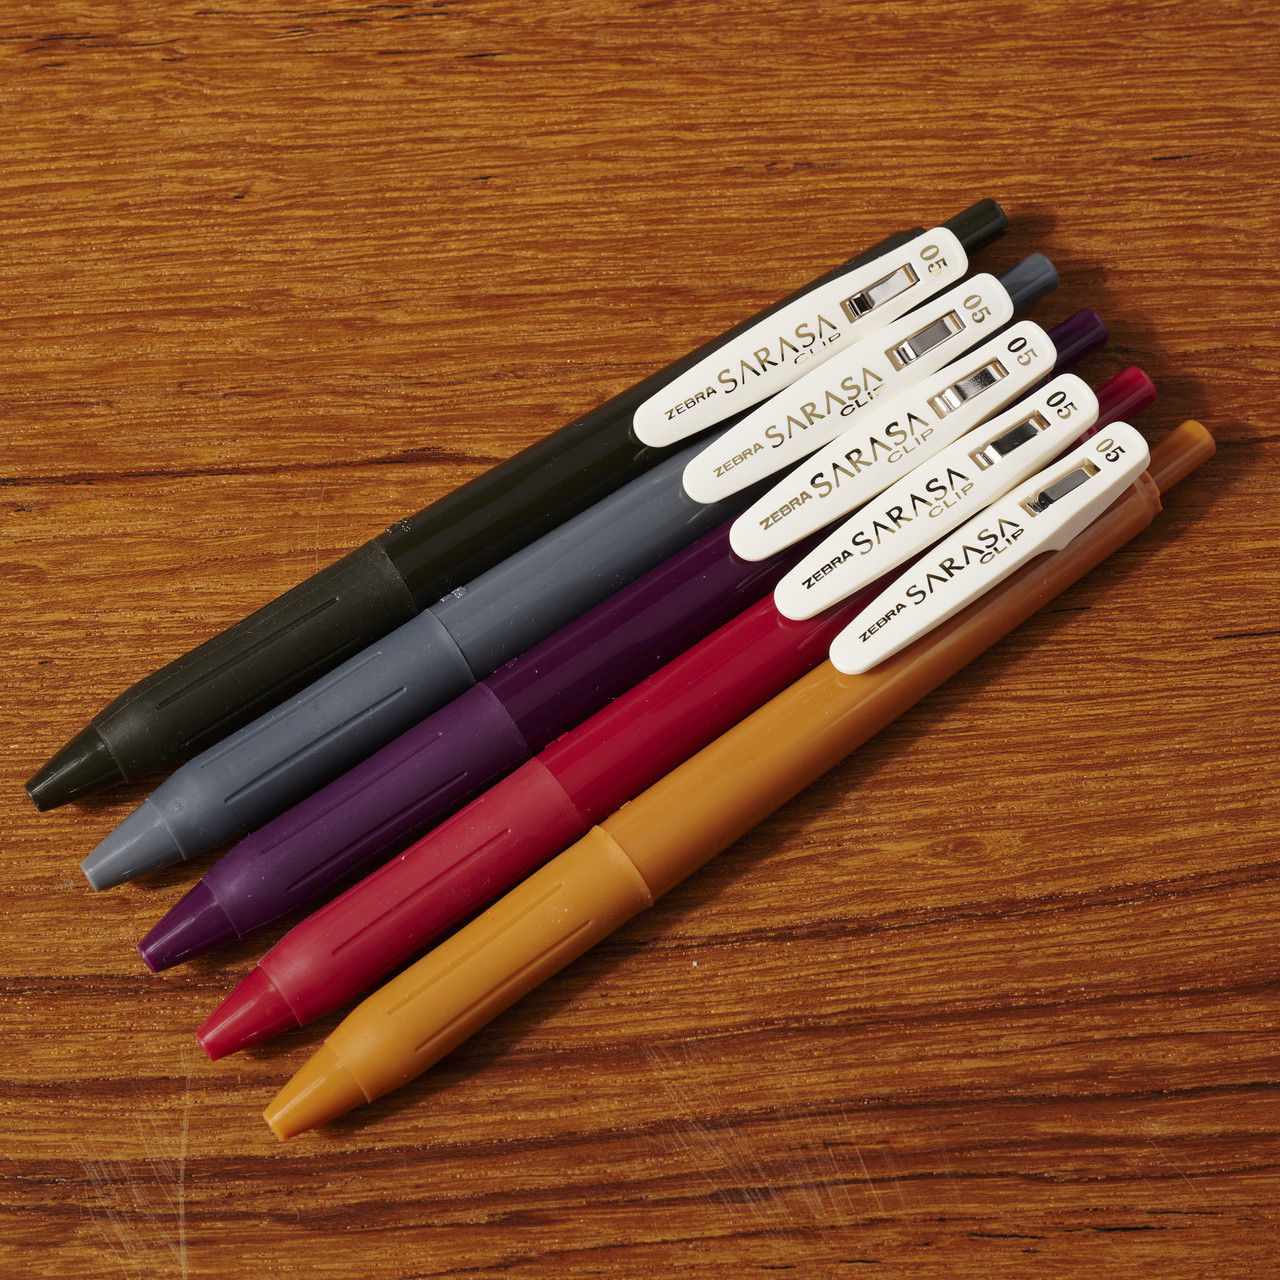 Sarasa Clip Relaxation Gel Pen 0.5mm – Honeypress